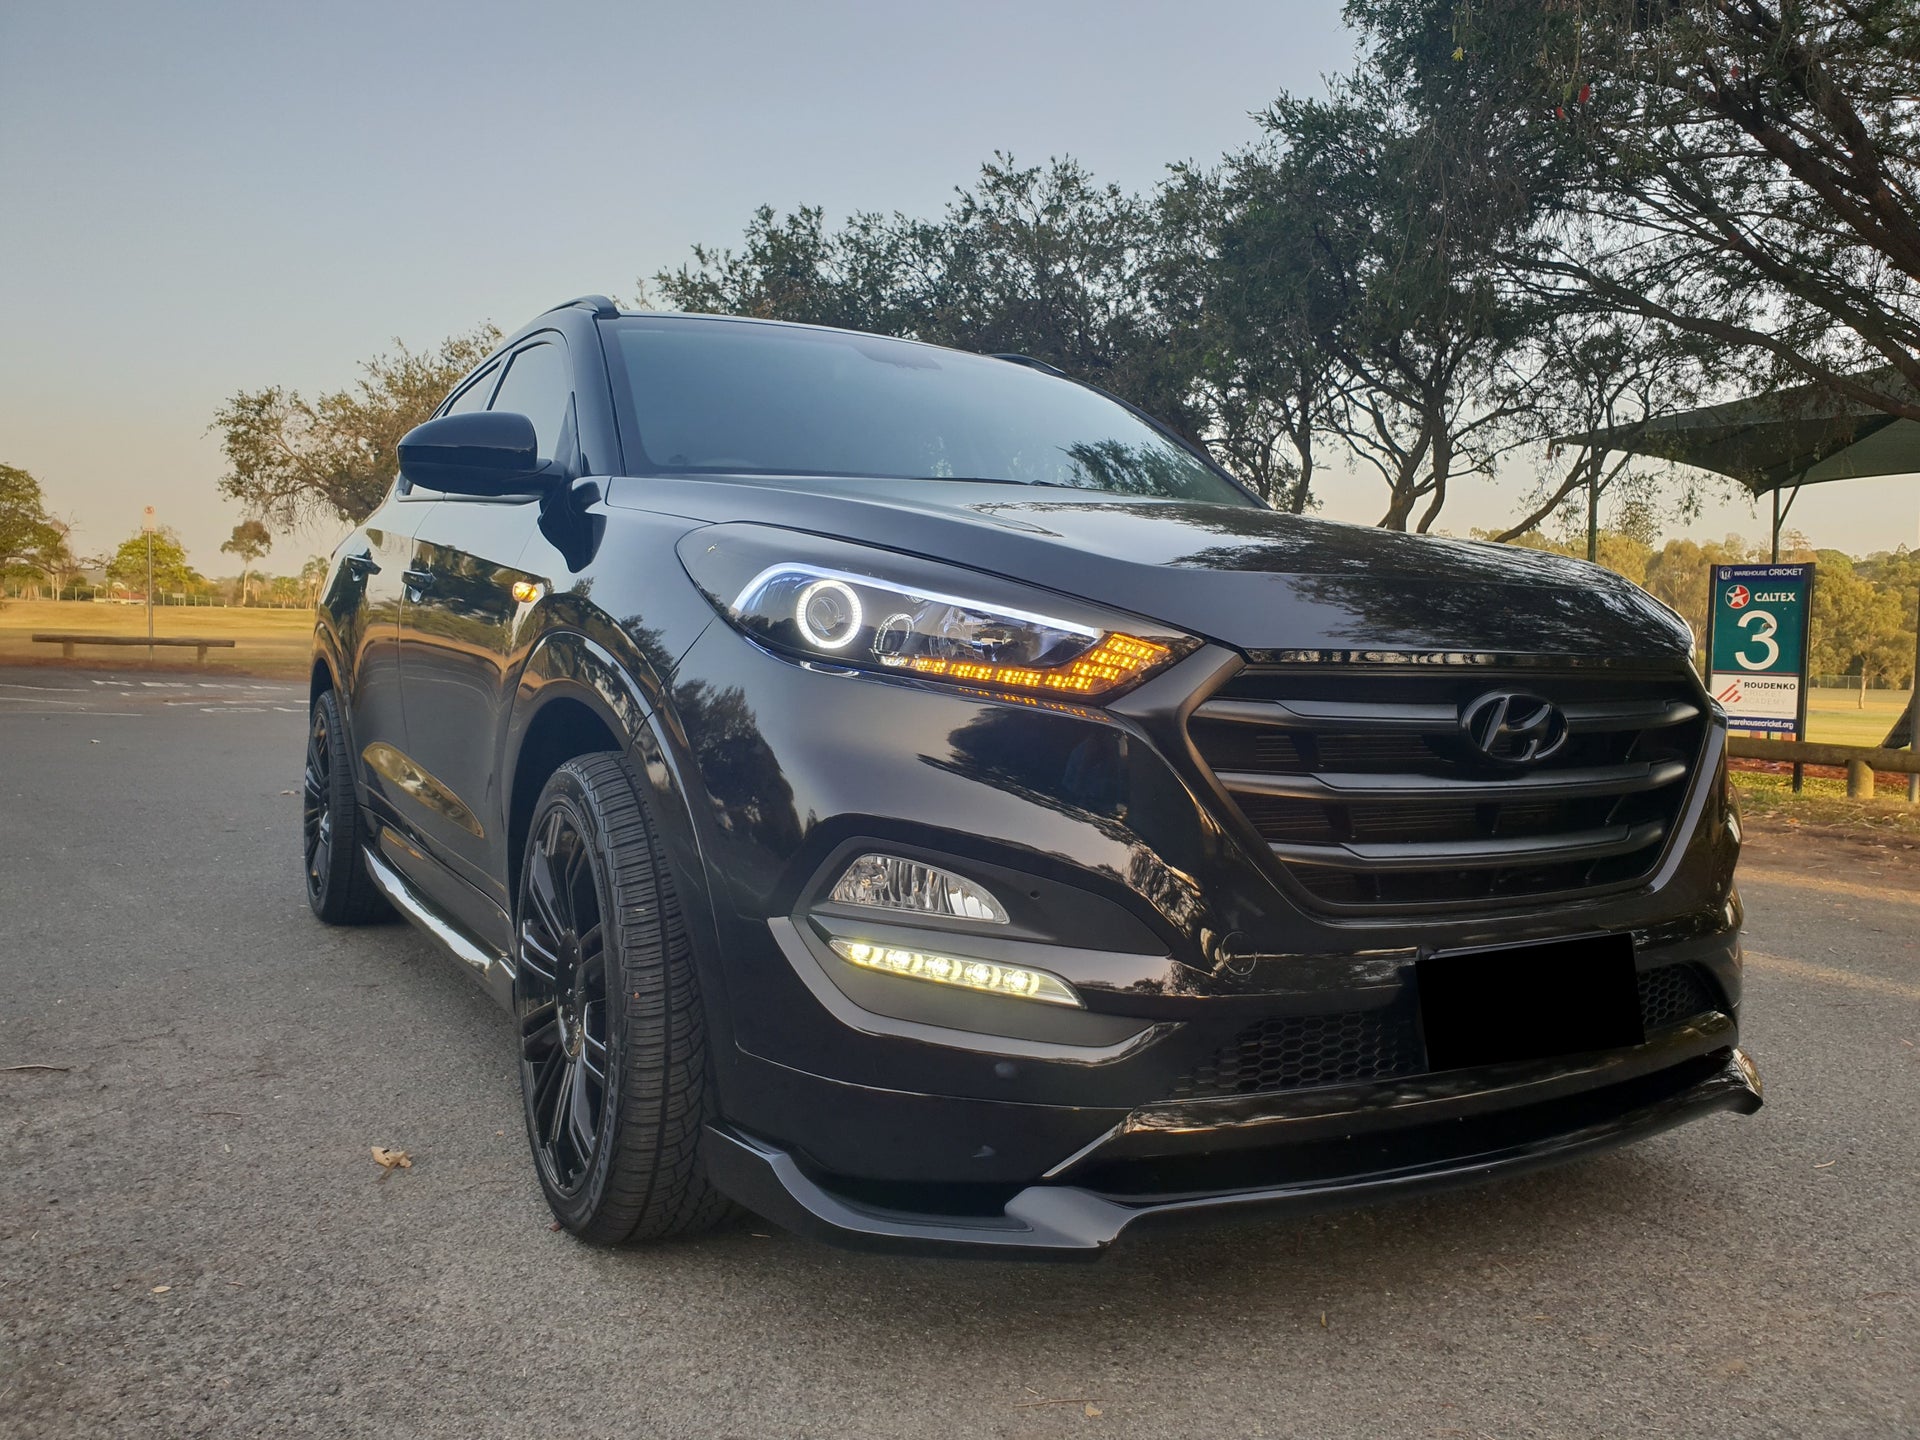 2019 Tucson Mod Options Hyundai Forums